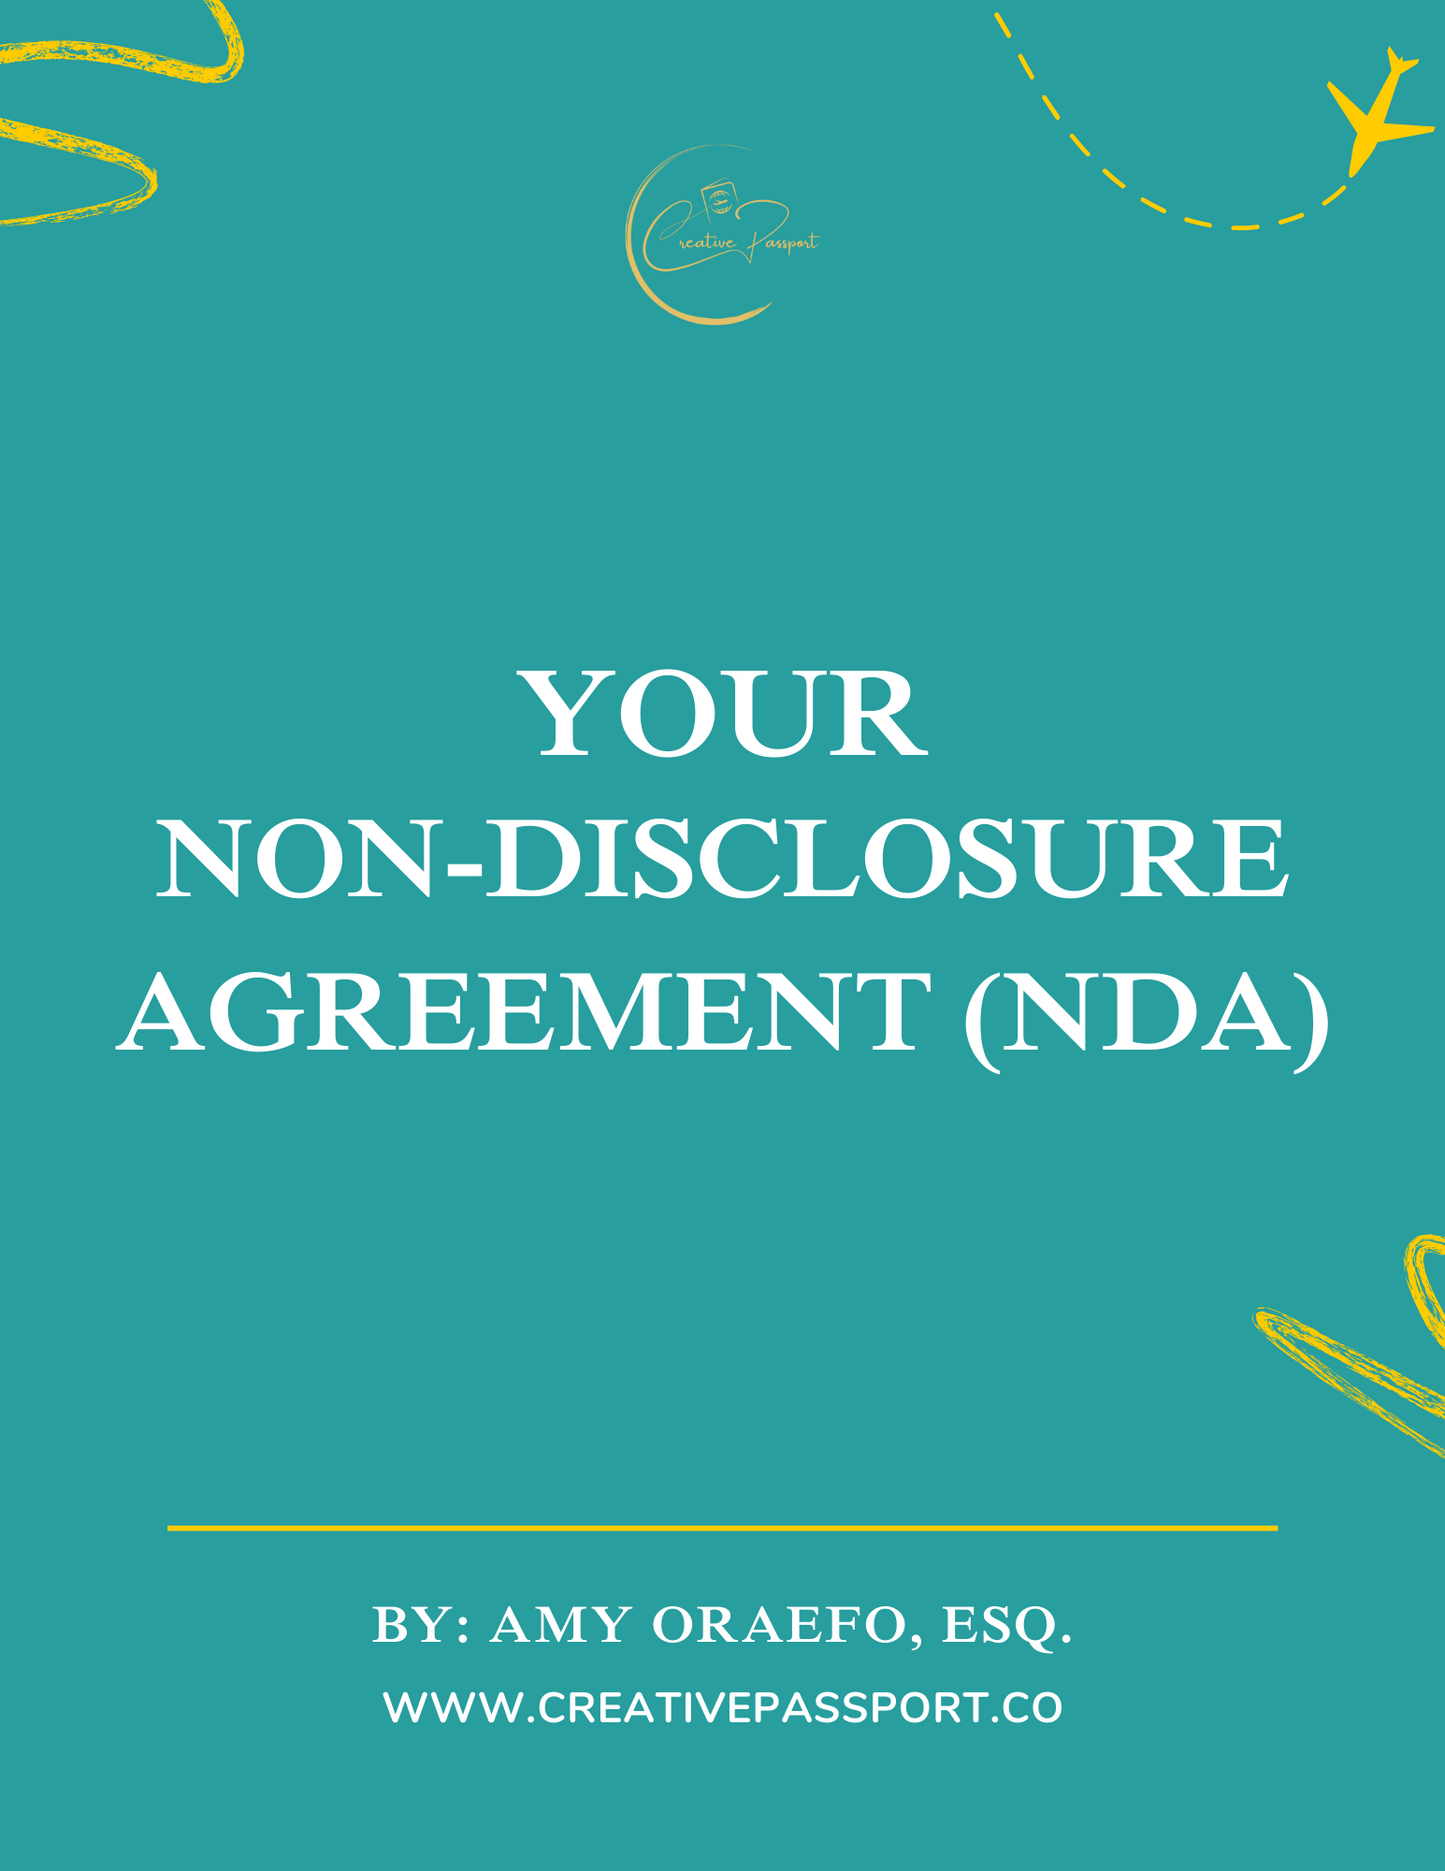 "Non-Disclosure Agreement" Digital Download